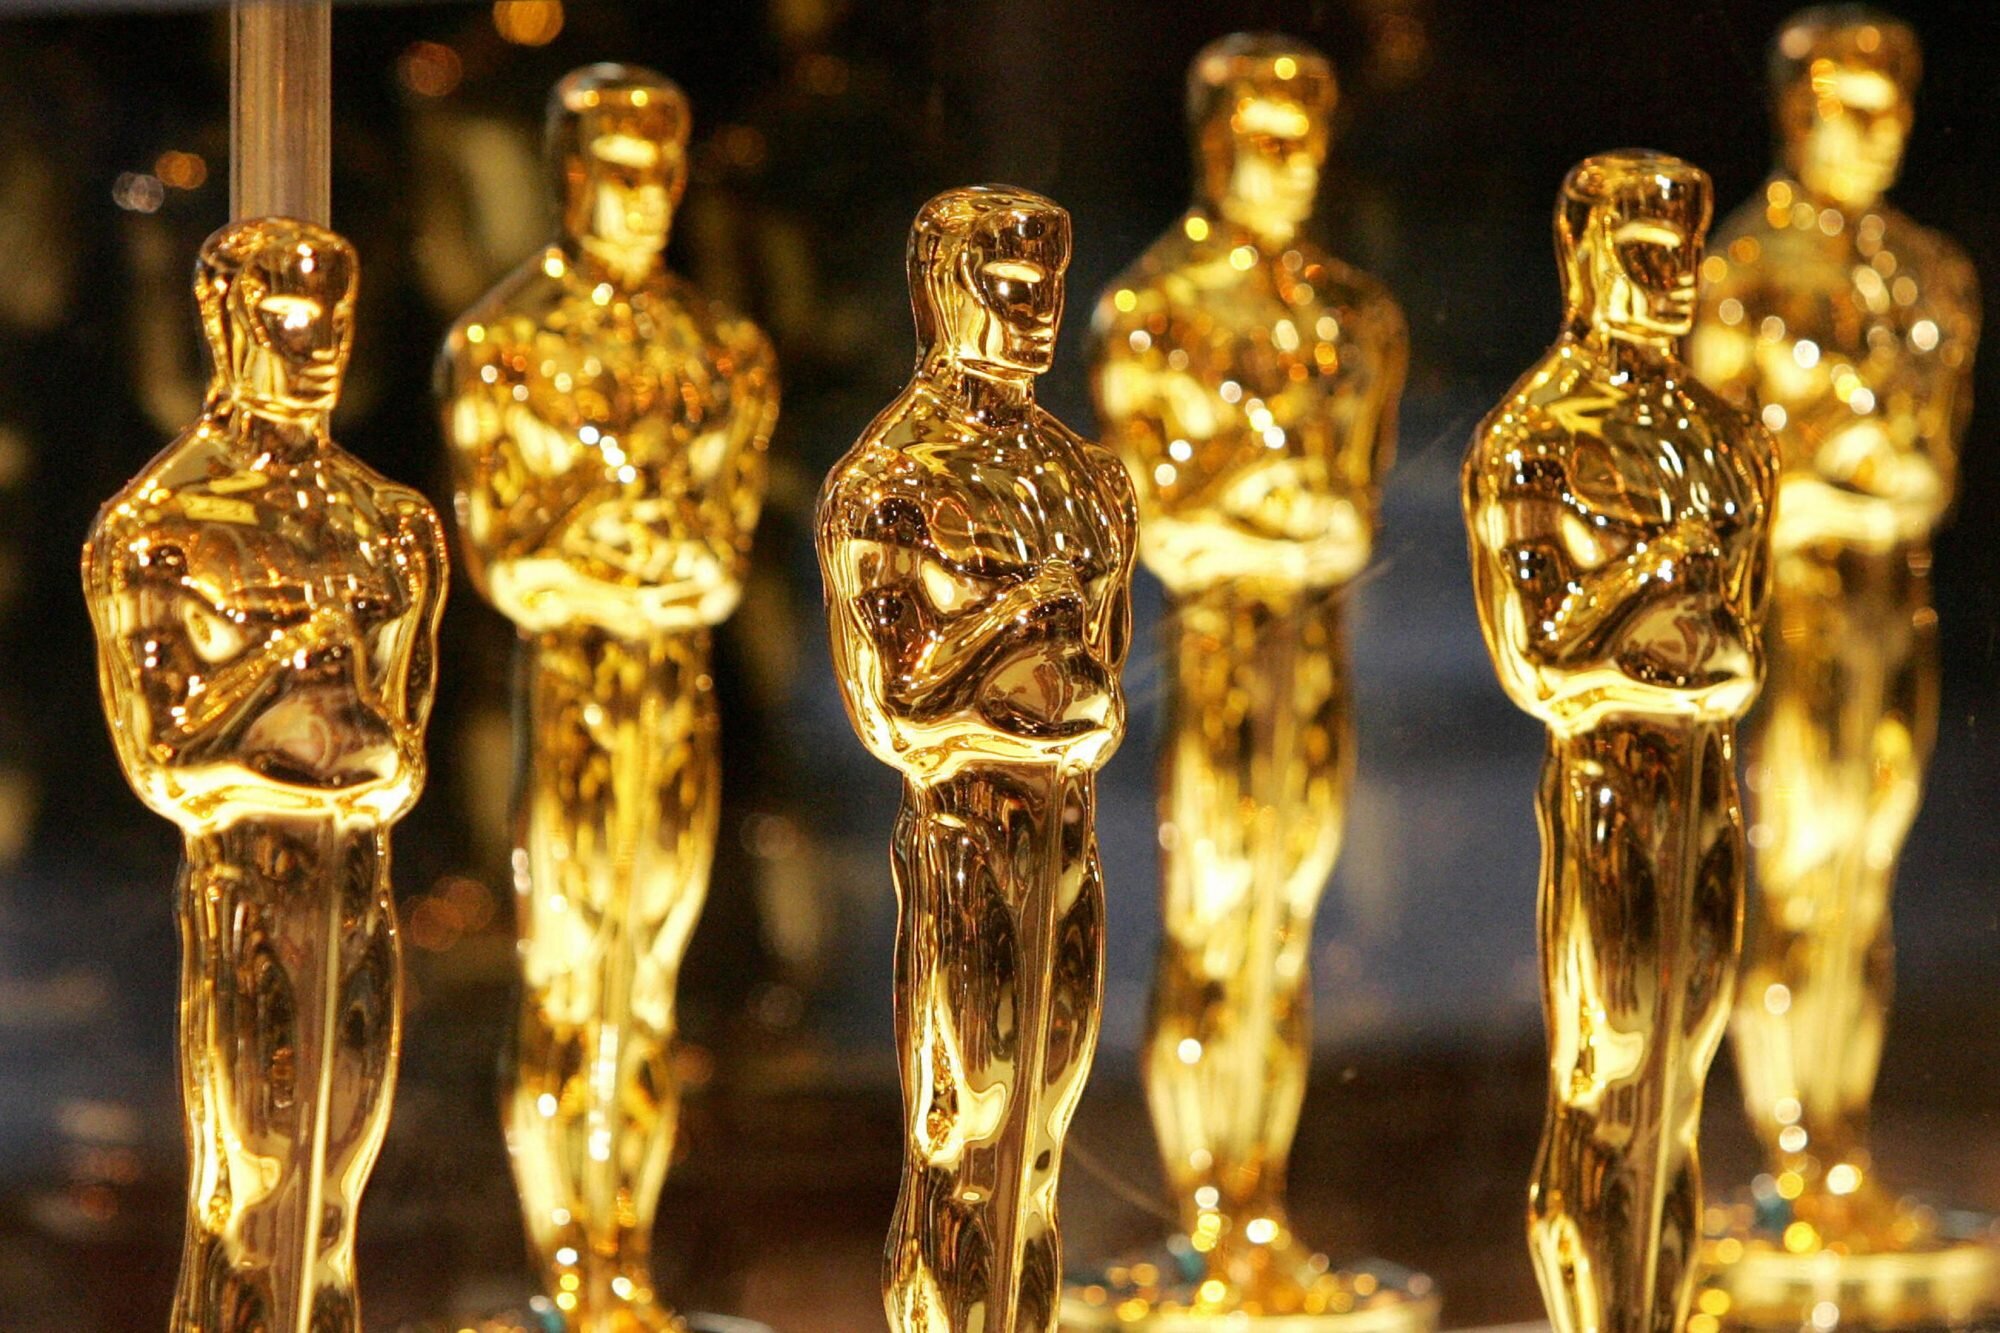 93rd Academy Awards 2021 – The Complete Winner List